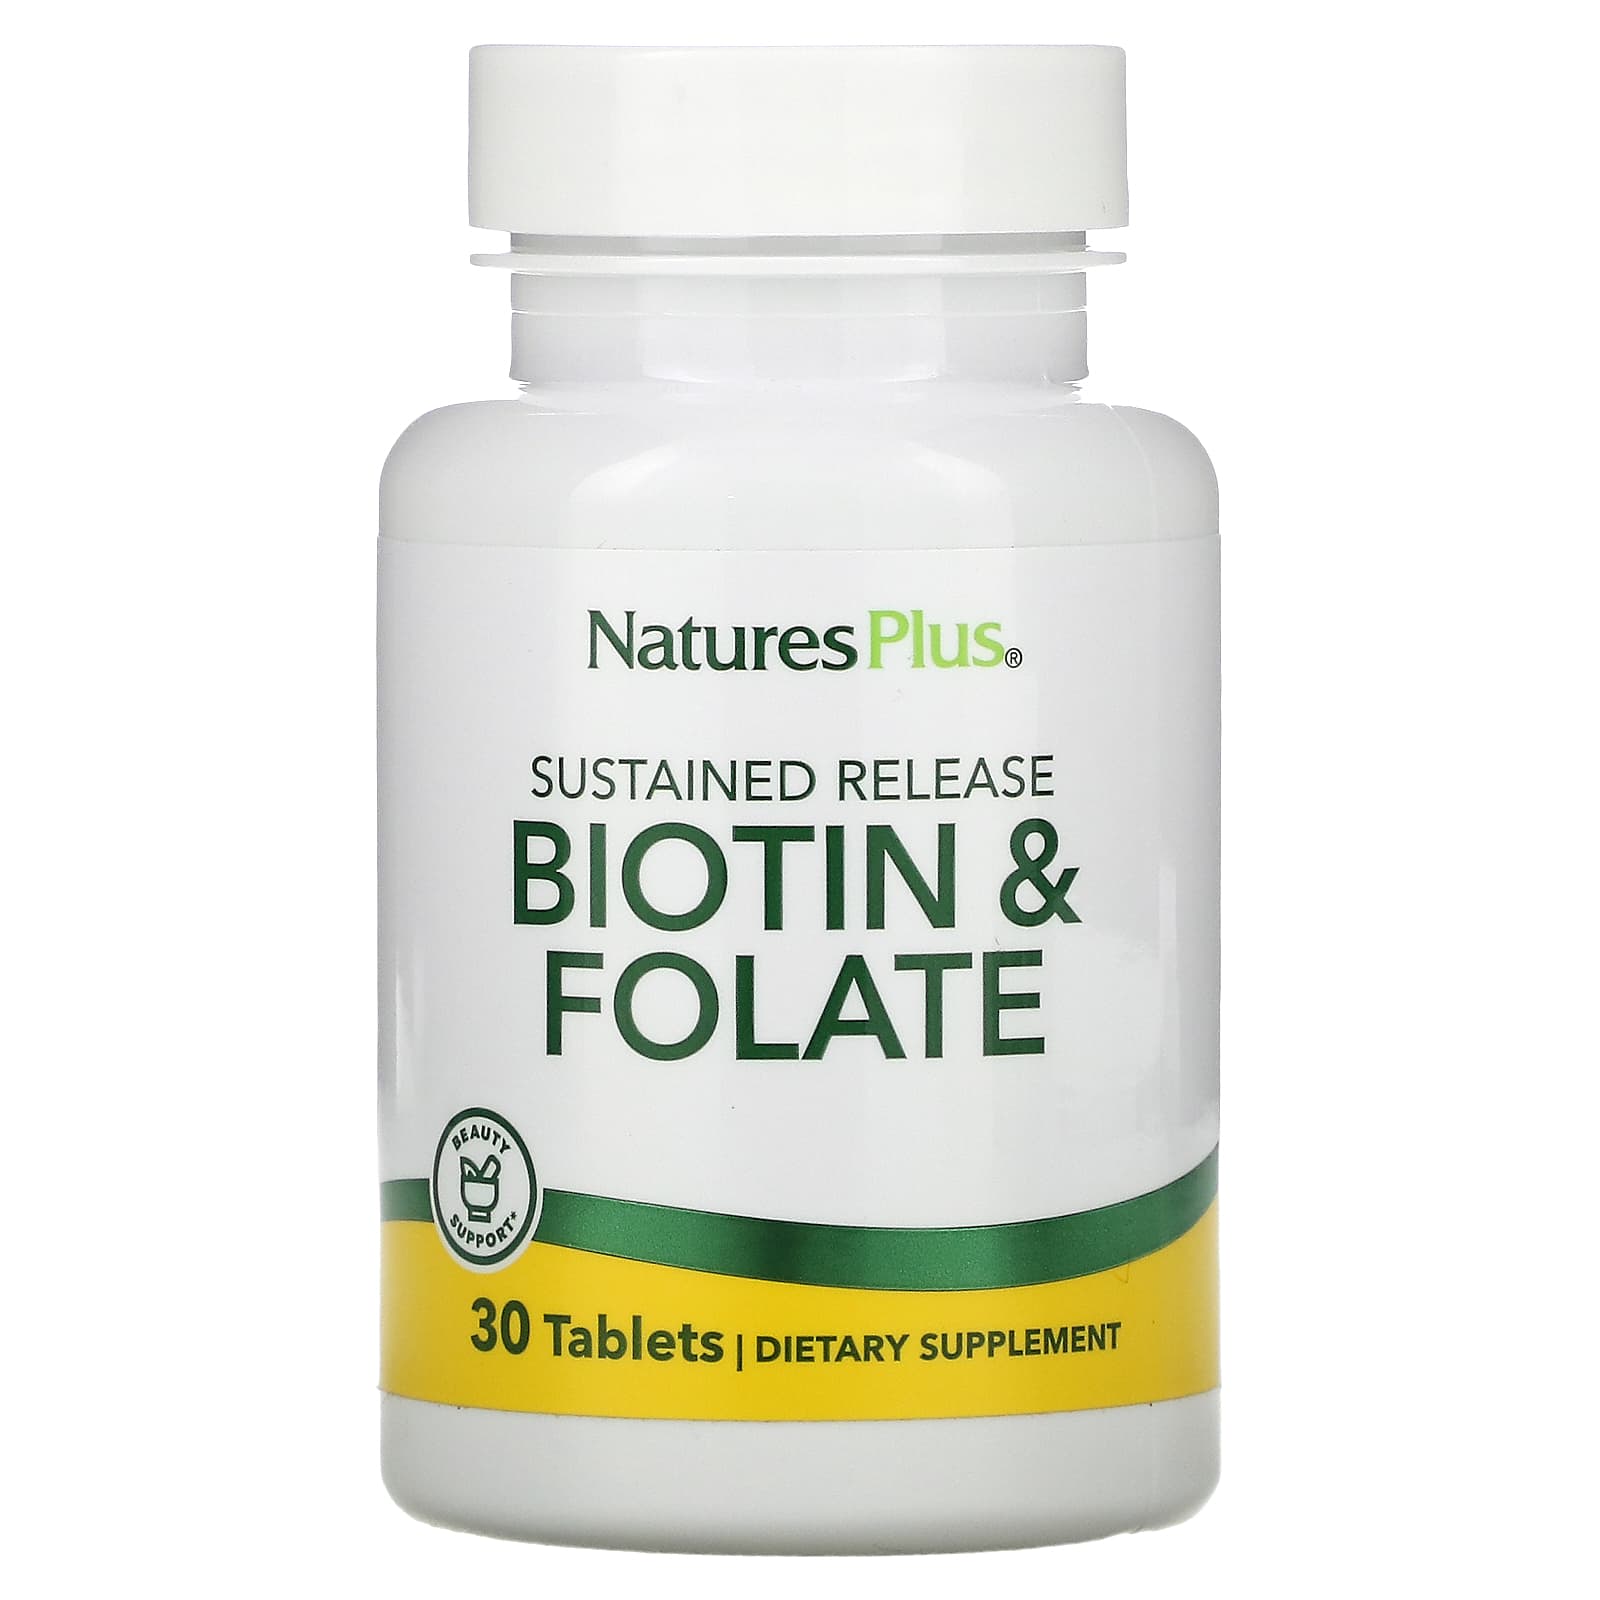 NaturesPlus-Sustained Release Biotin & Folate-30 Tablets